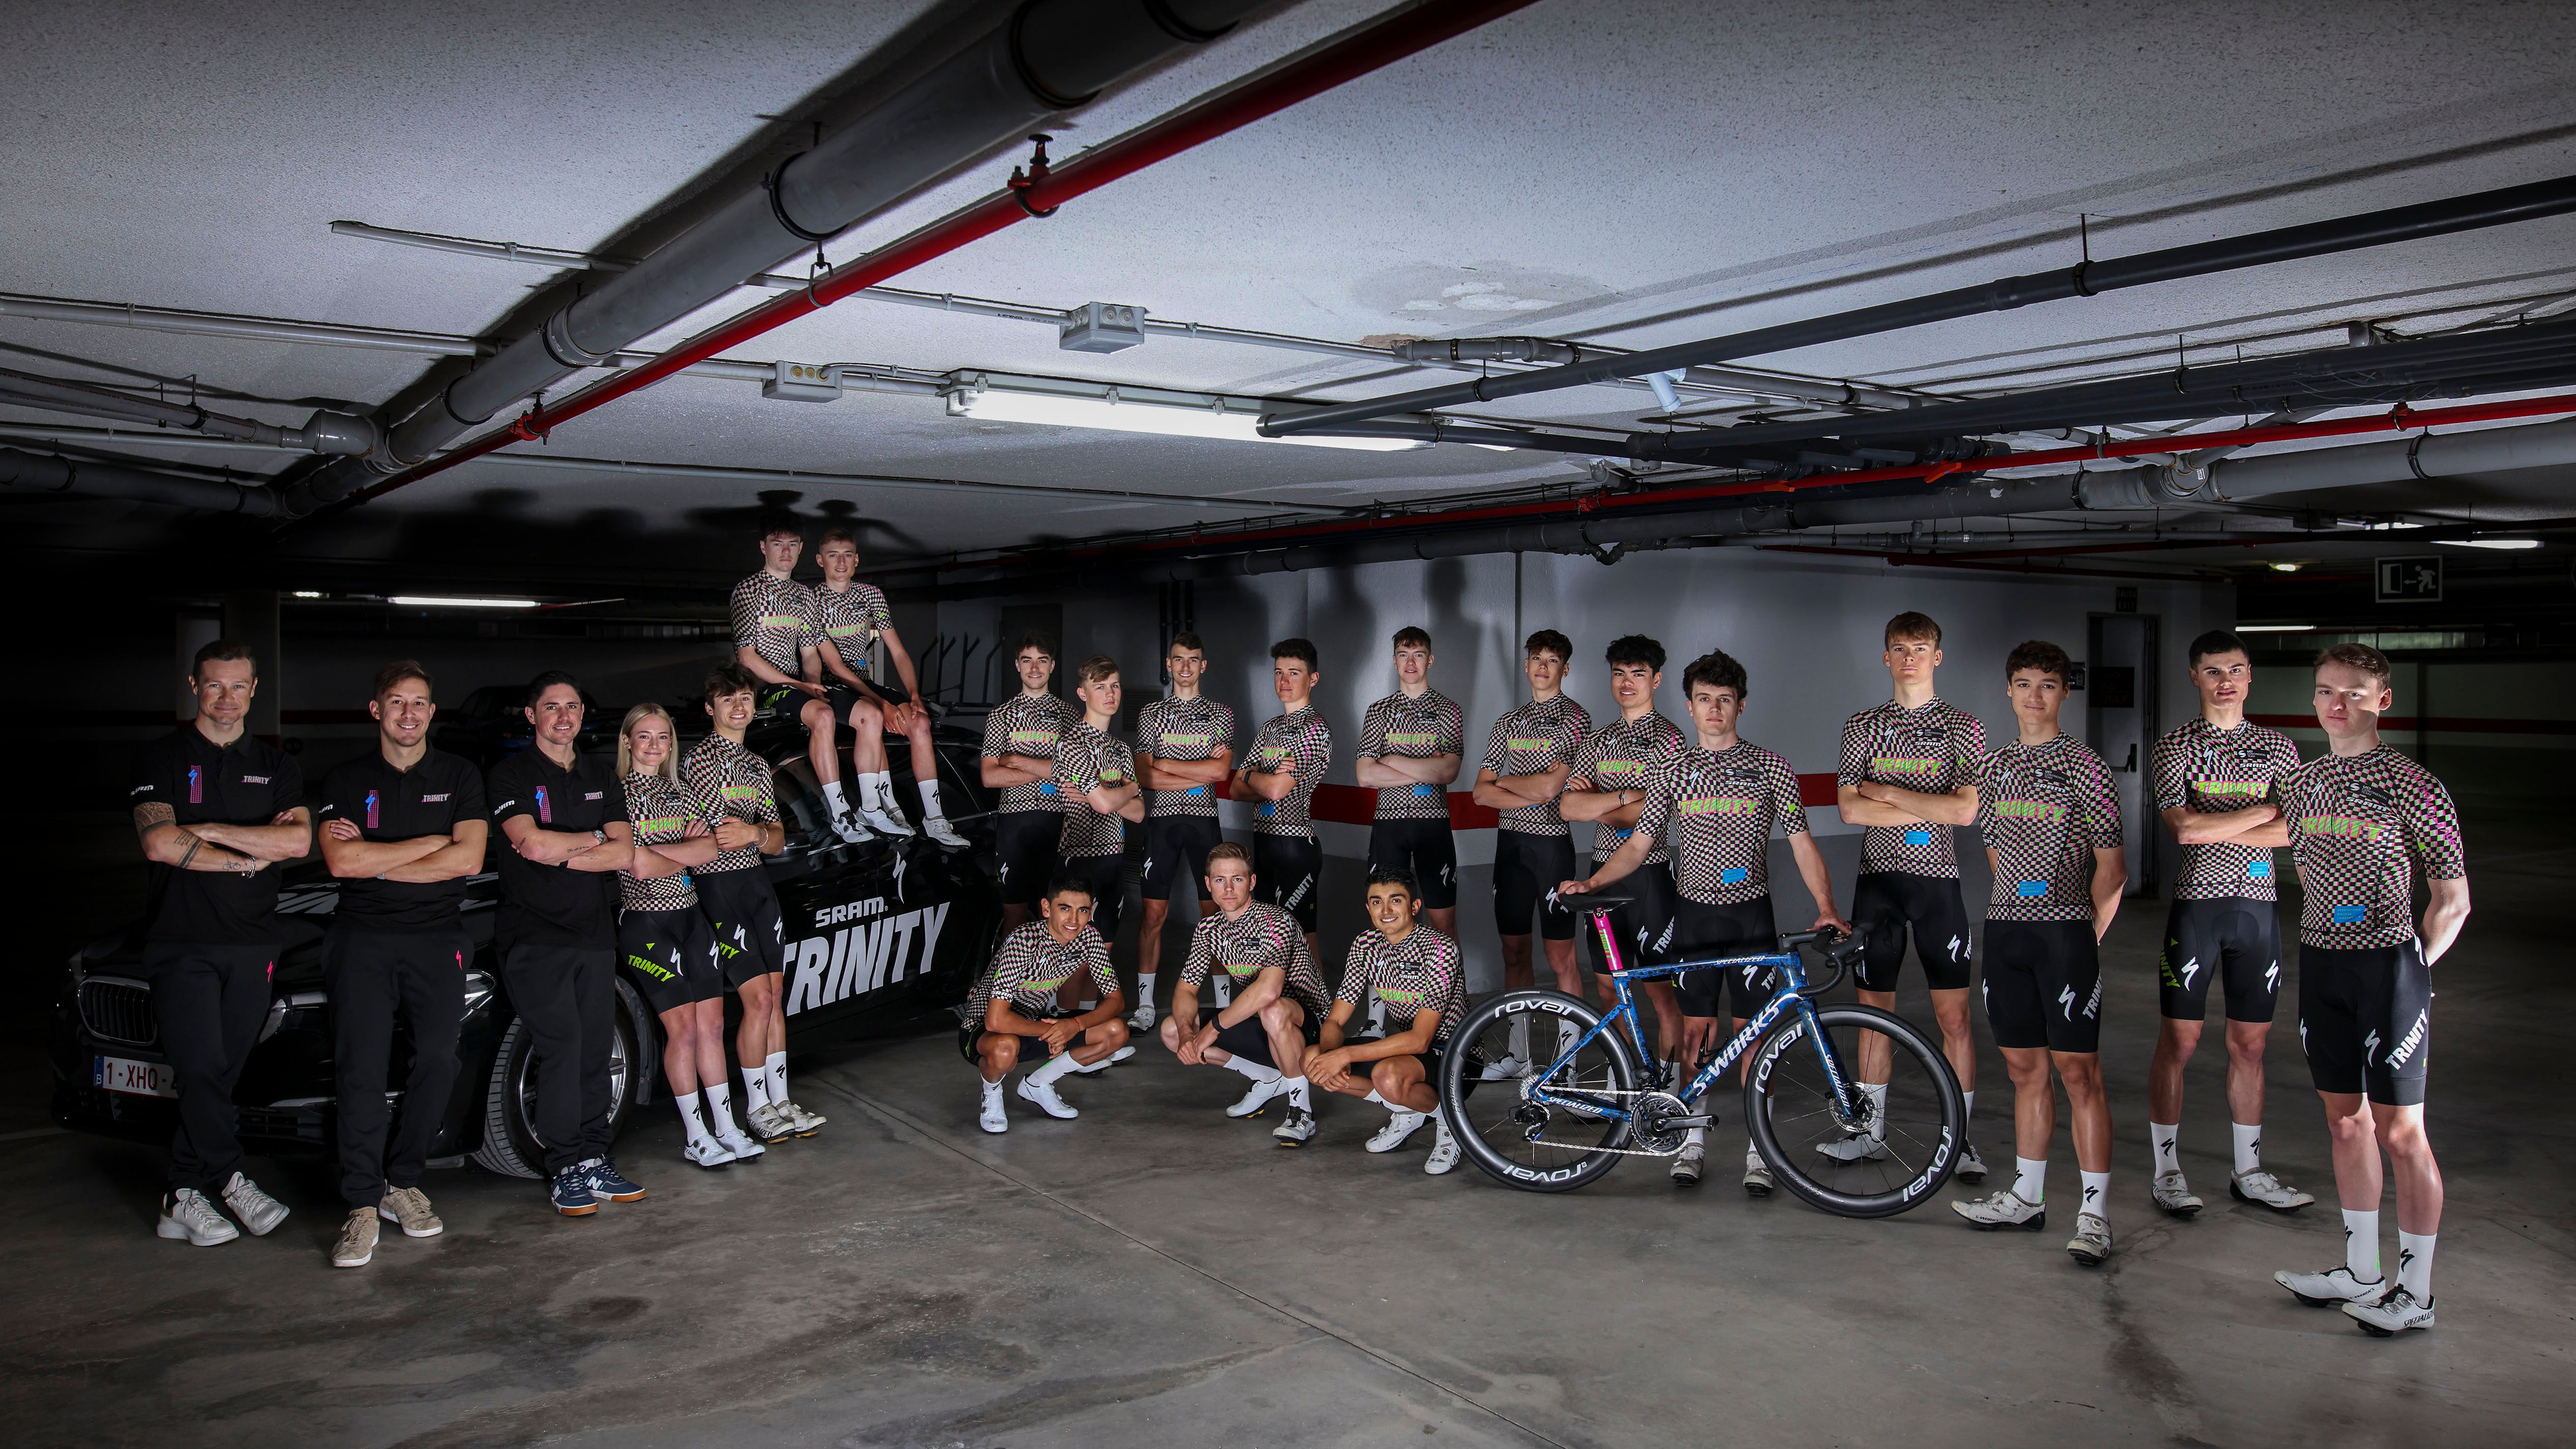 Trinity Racing adds 'chaos' to peloton with dizzying new kit Cyclingnews